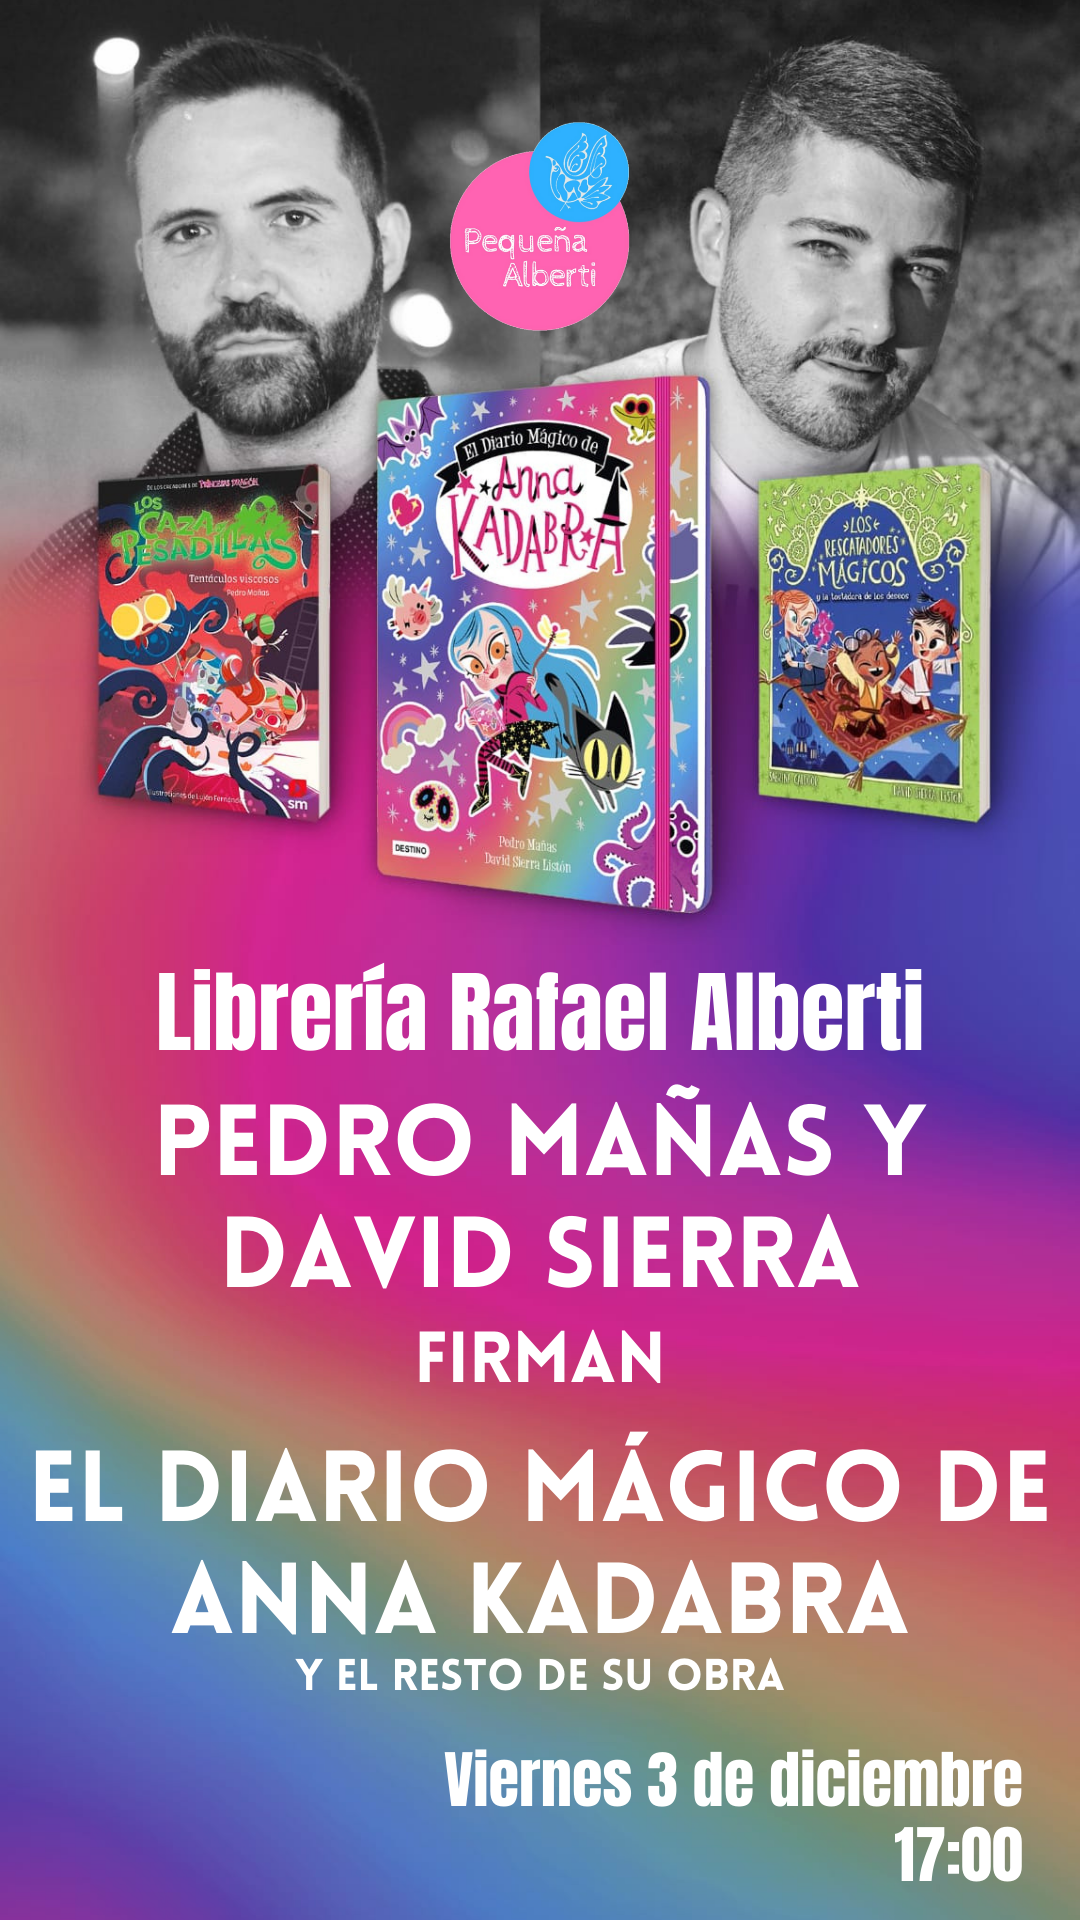 PEDRO MAÑAS y DAVID SIERRA firman 'El diario mágico de Anna Kadabra'